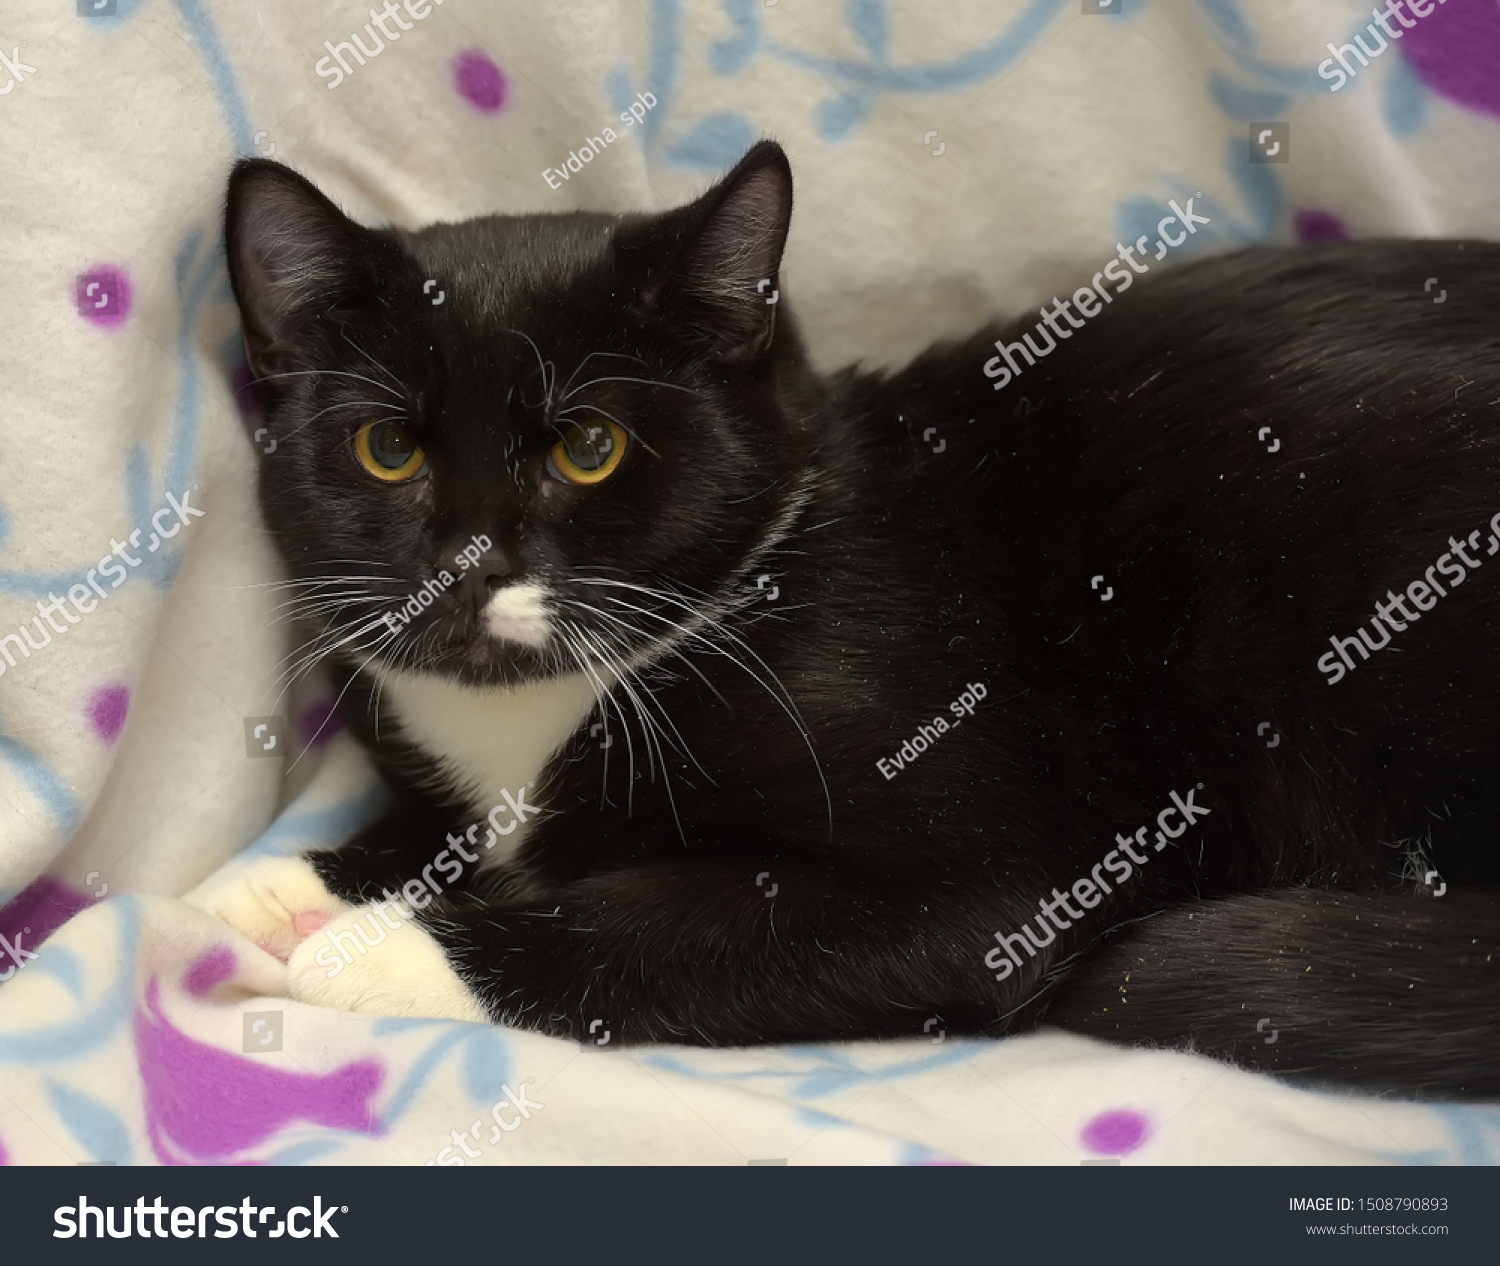 Black White Plump European Shorthair Cat Animals Wildlife Stock Image 1508790893